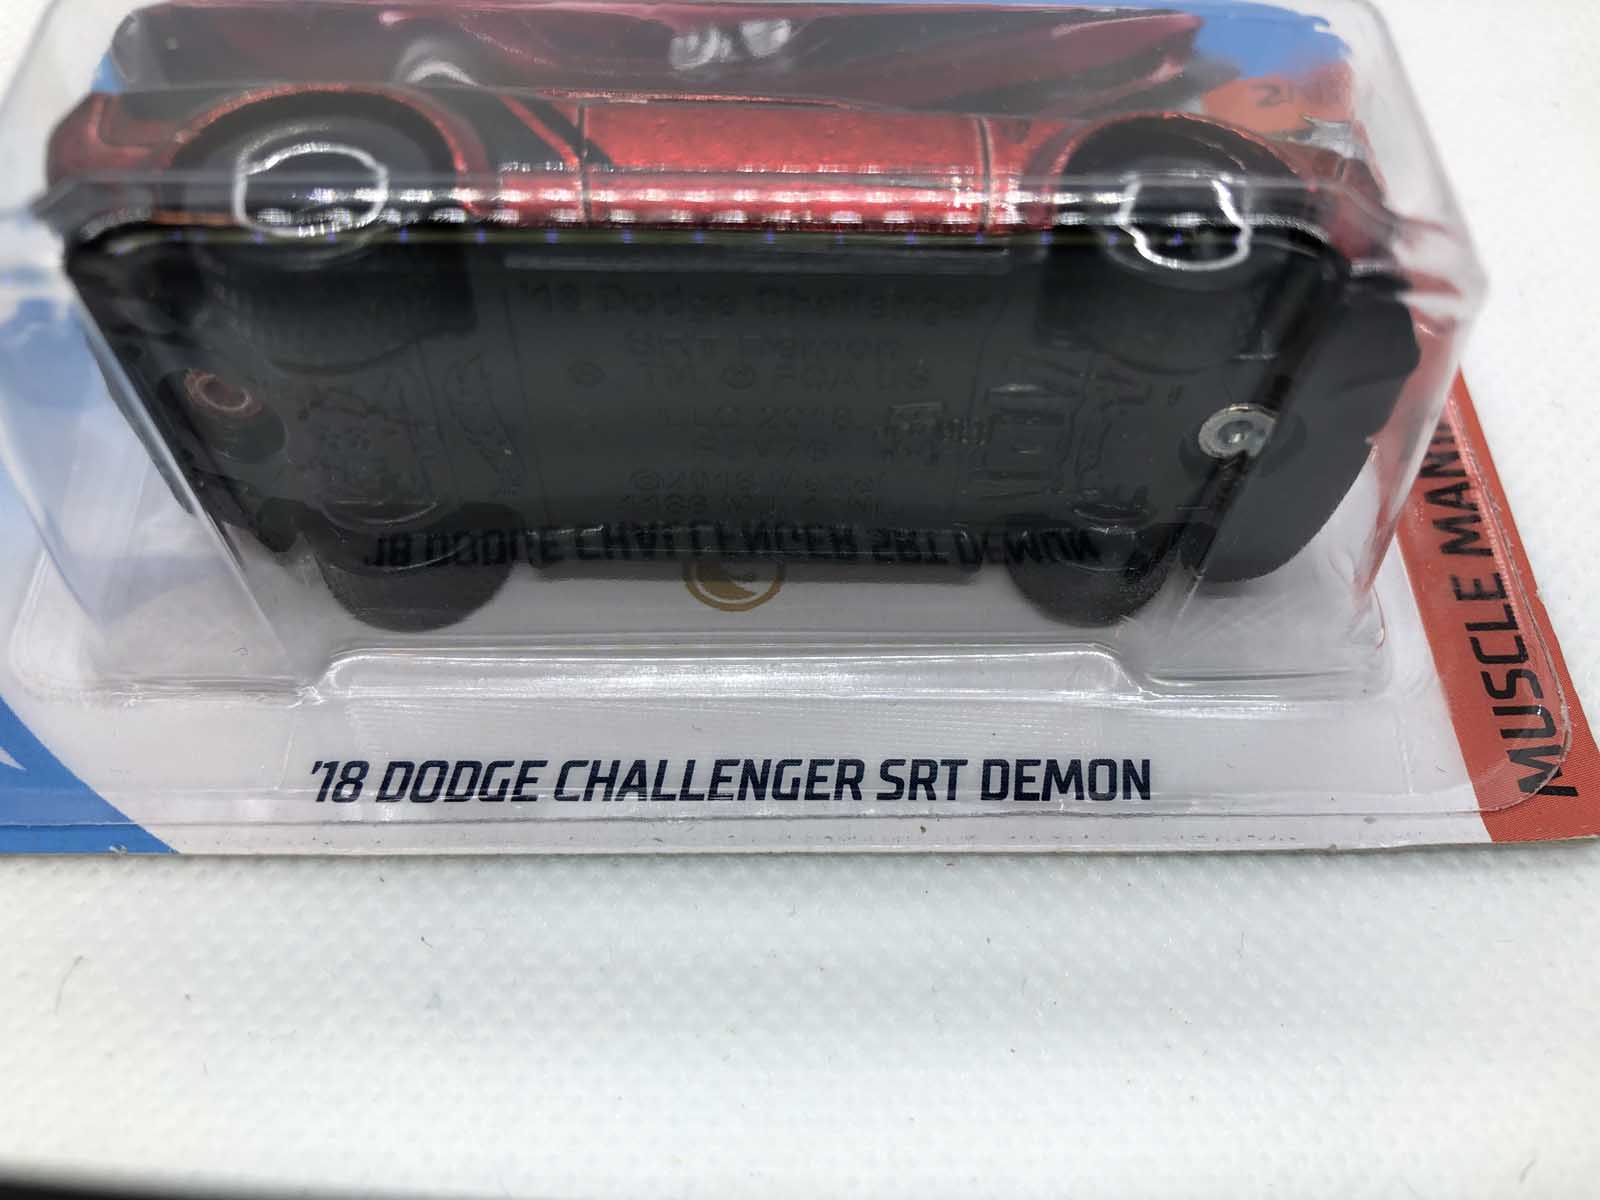 '18 Dodge Challenger SRT Demon Hot Wheels